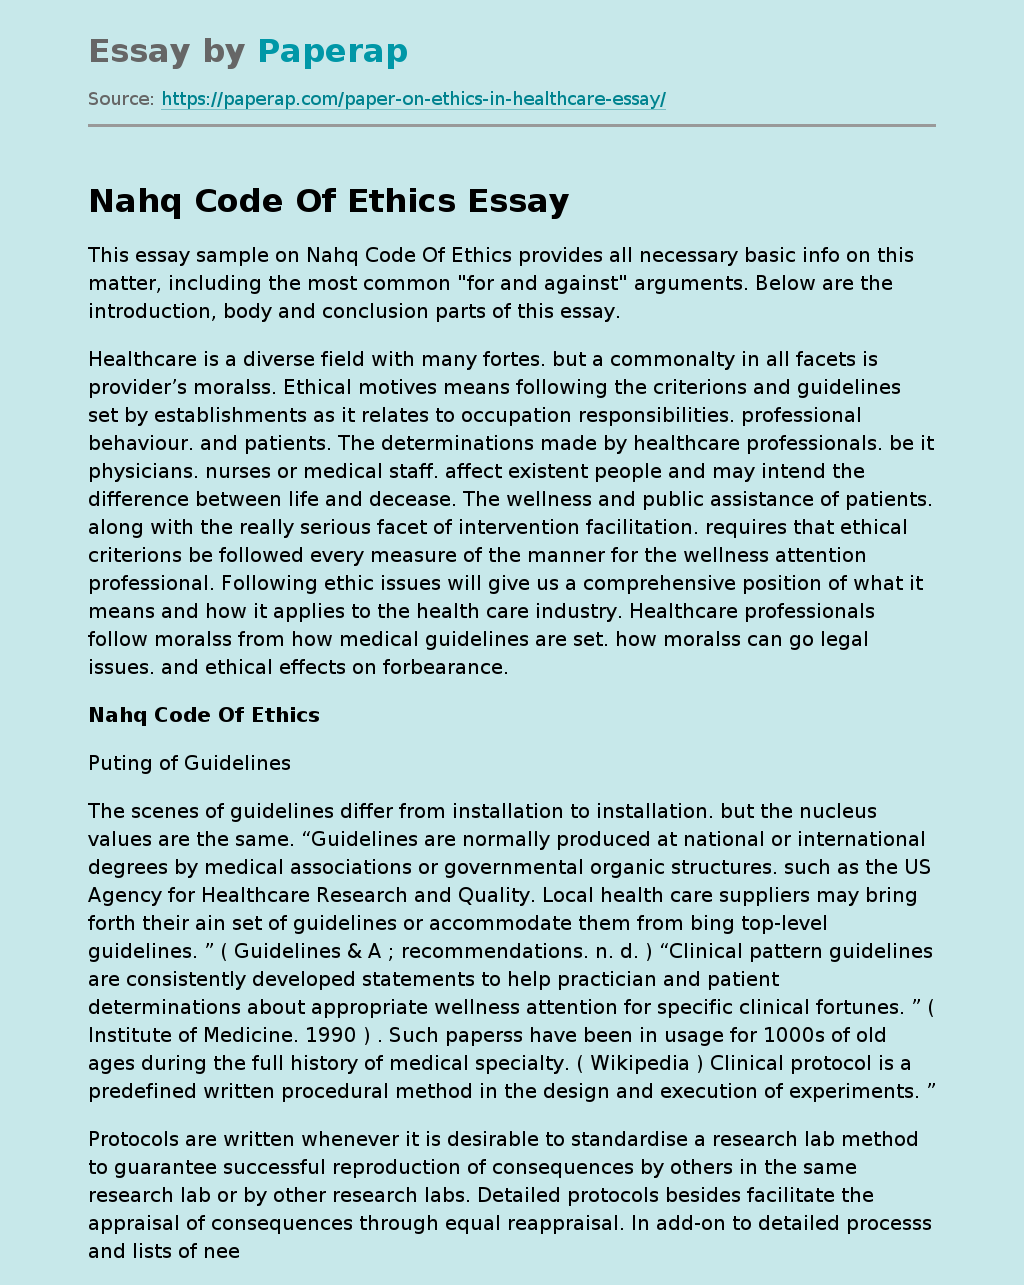 Nahq Code Of Ethics